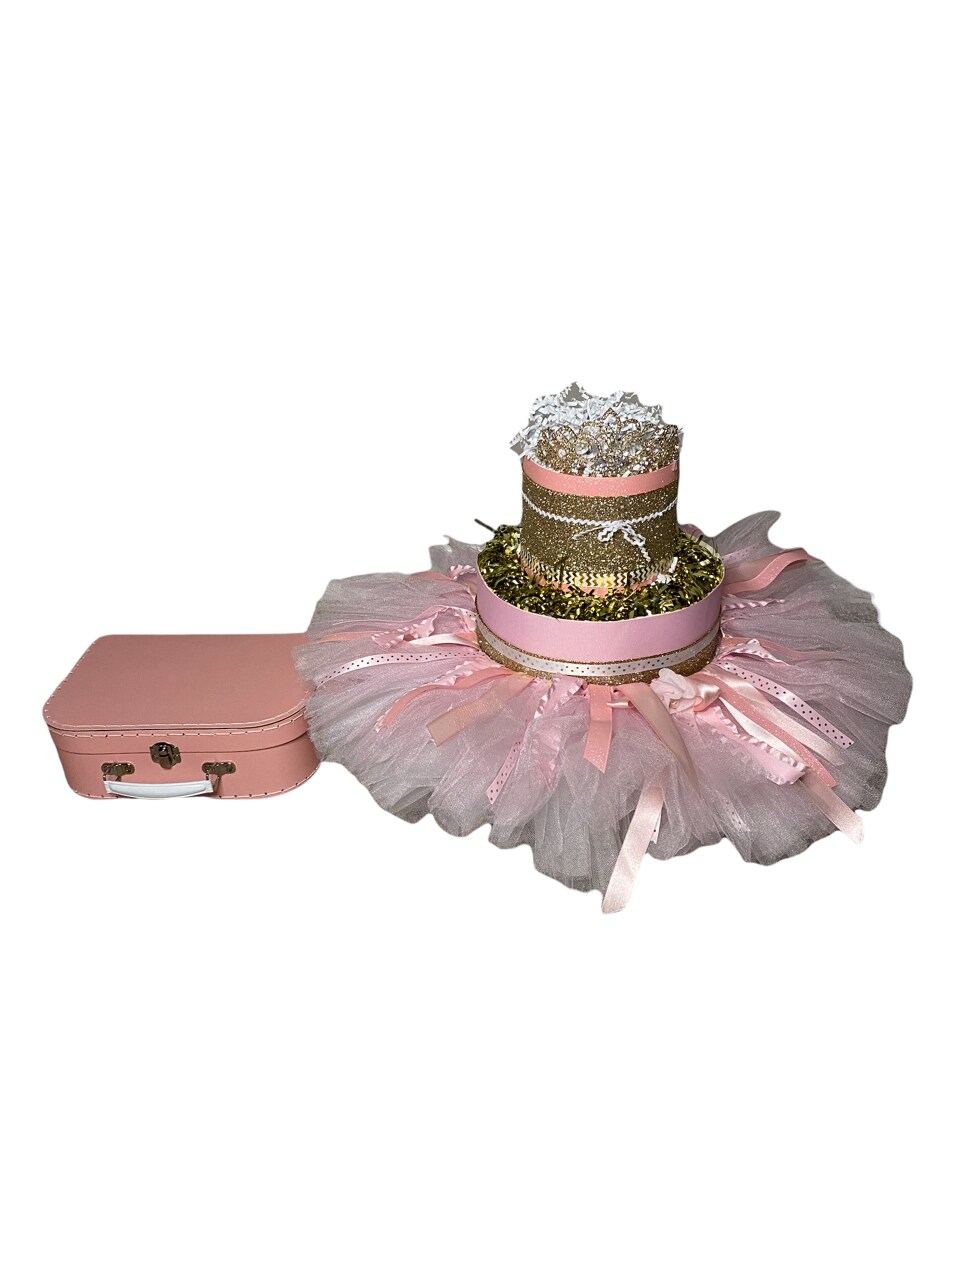 Baby Gift Set - Decorative Storage Box + Diaper Cake